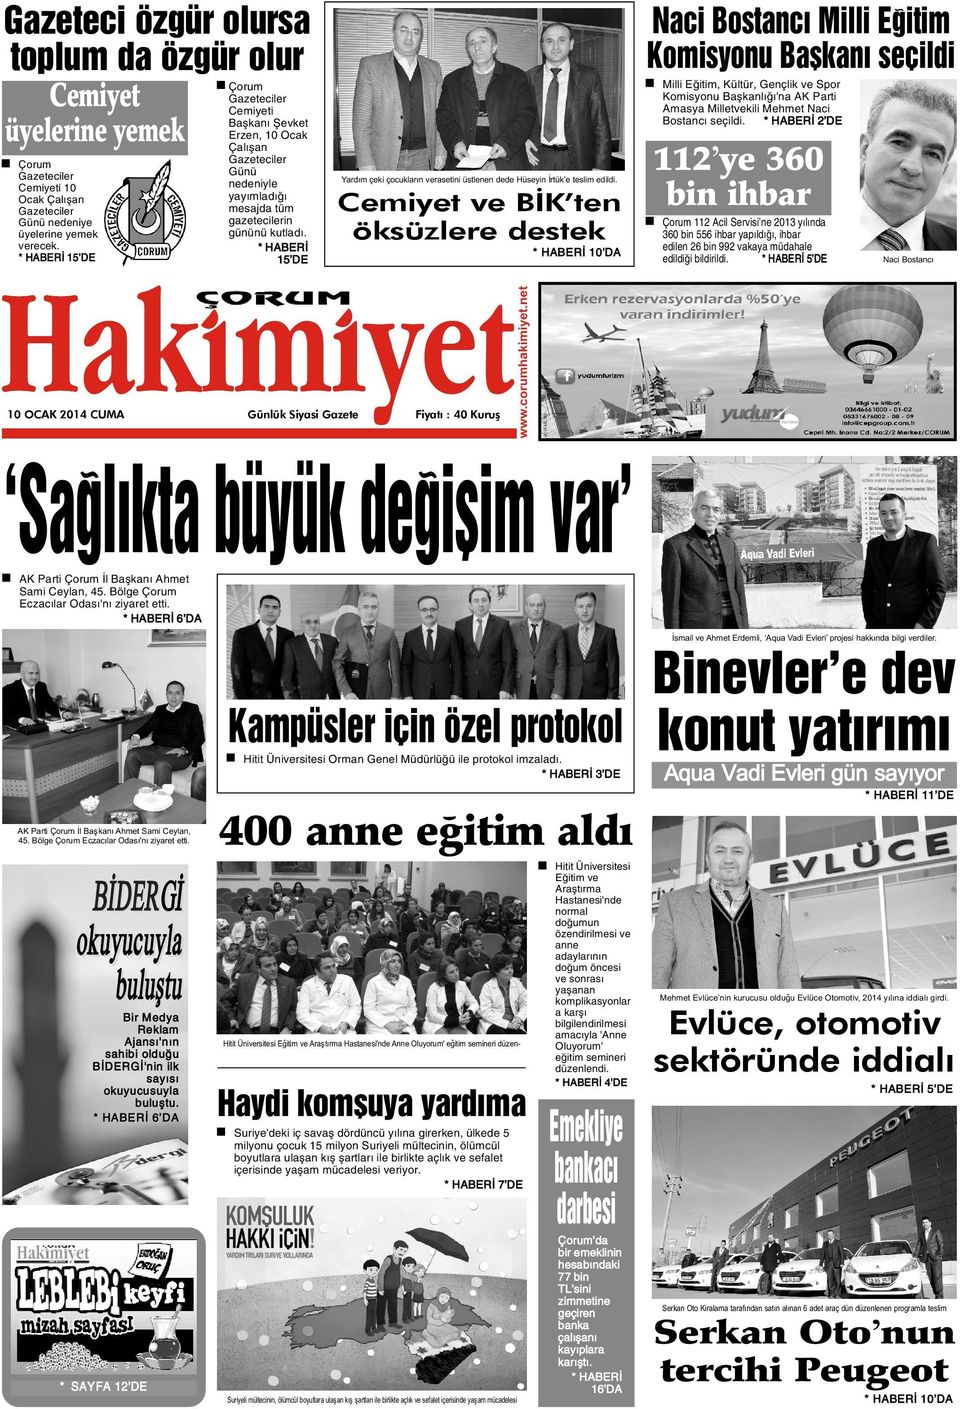 * HABERÝ 15 DE * HABERÝ 15 DE 10 OCAK 2014 CUMA Milli Eðitim, Kültür, Gençlik ve Spor Komisyonu Baþkanlýðý'na AK Parti Amasya Milletvekili Mehmet Naci Bostancý seçildi.